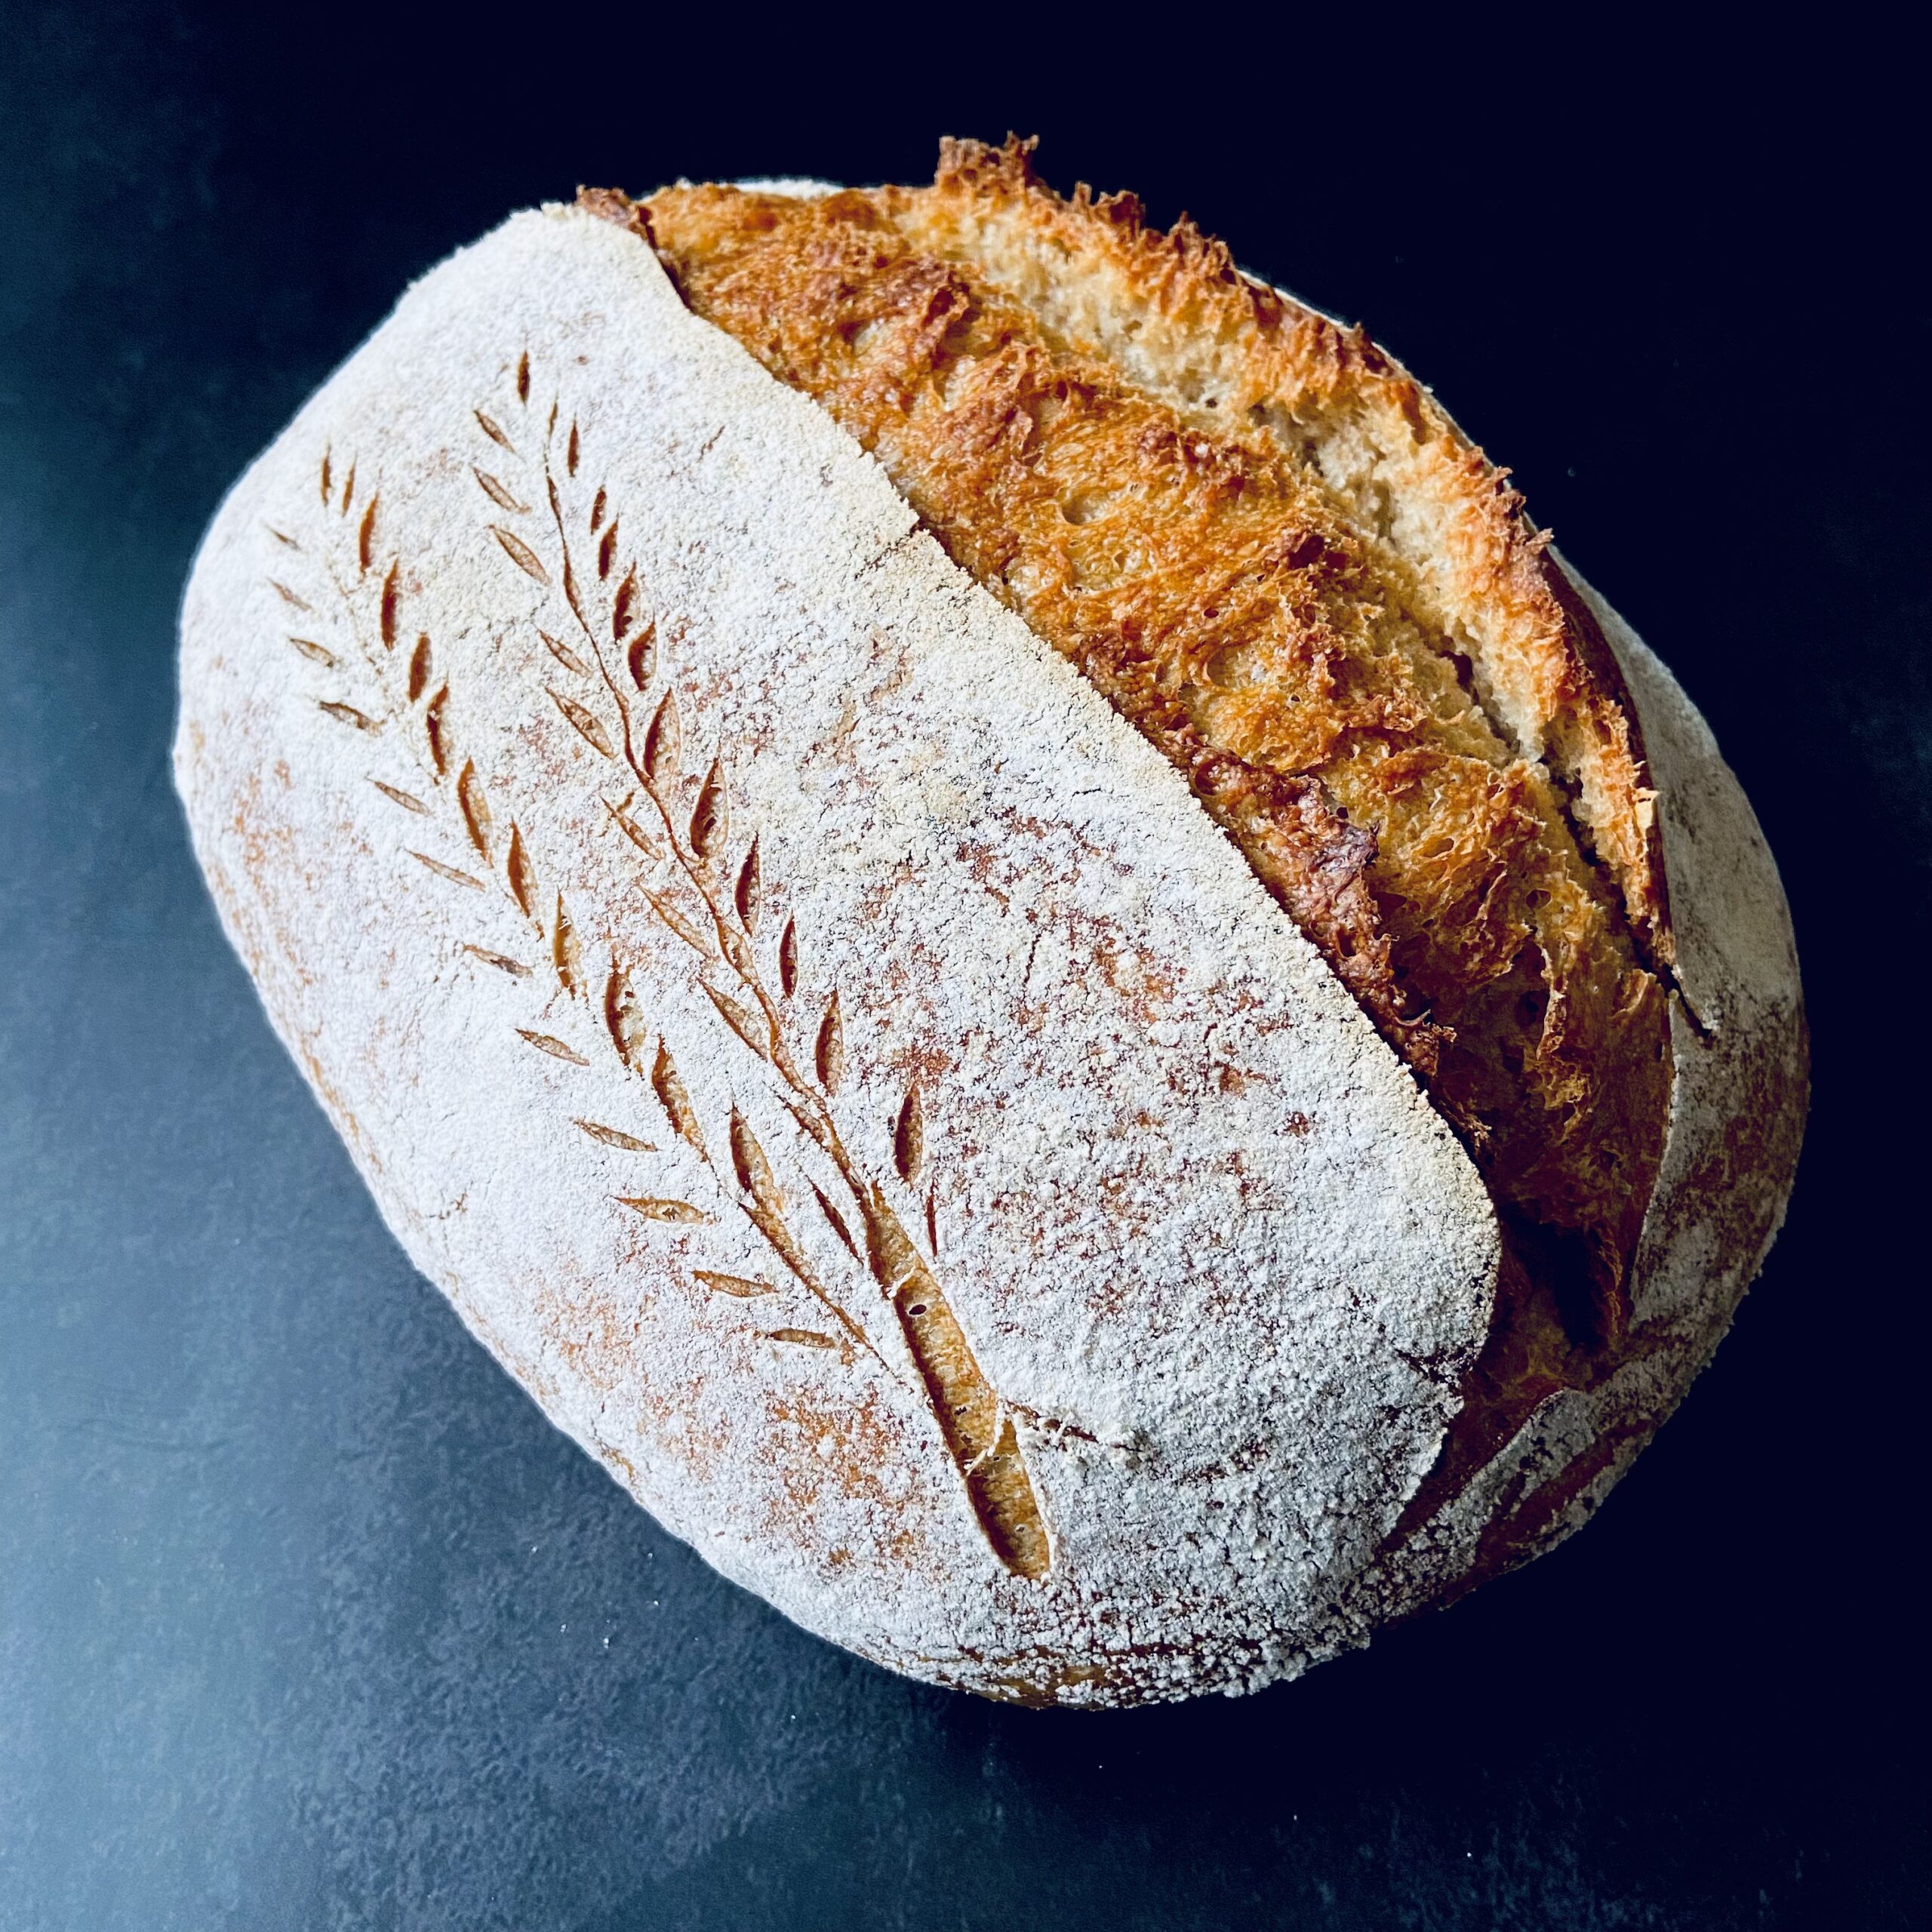 Sourdough discard bread with ancient grains